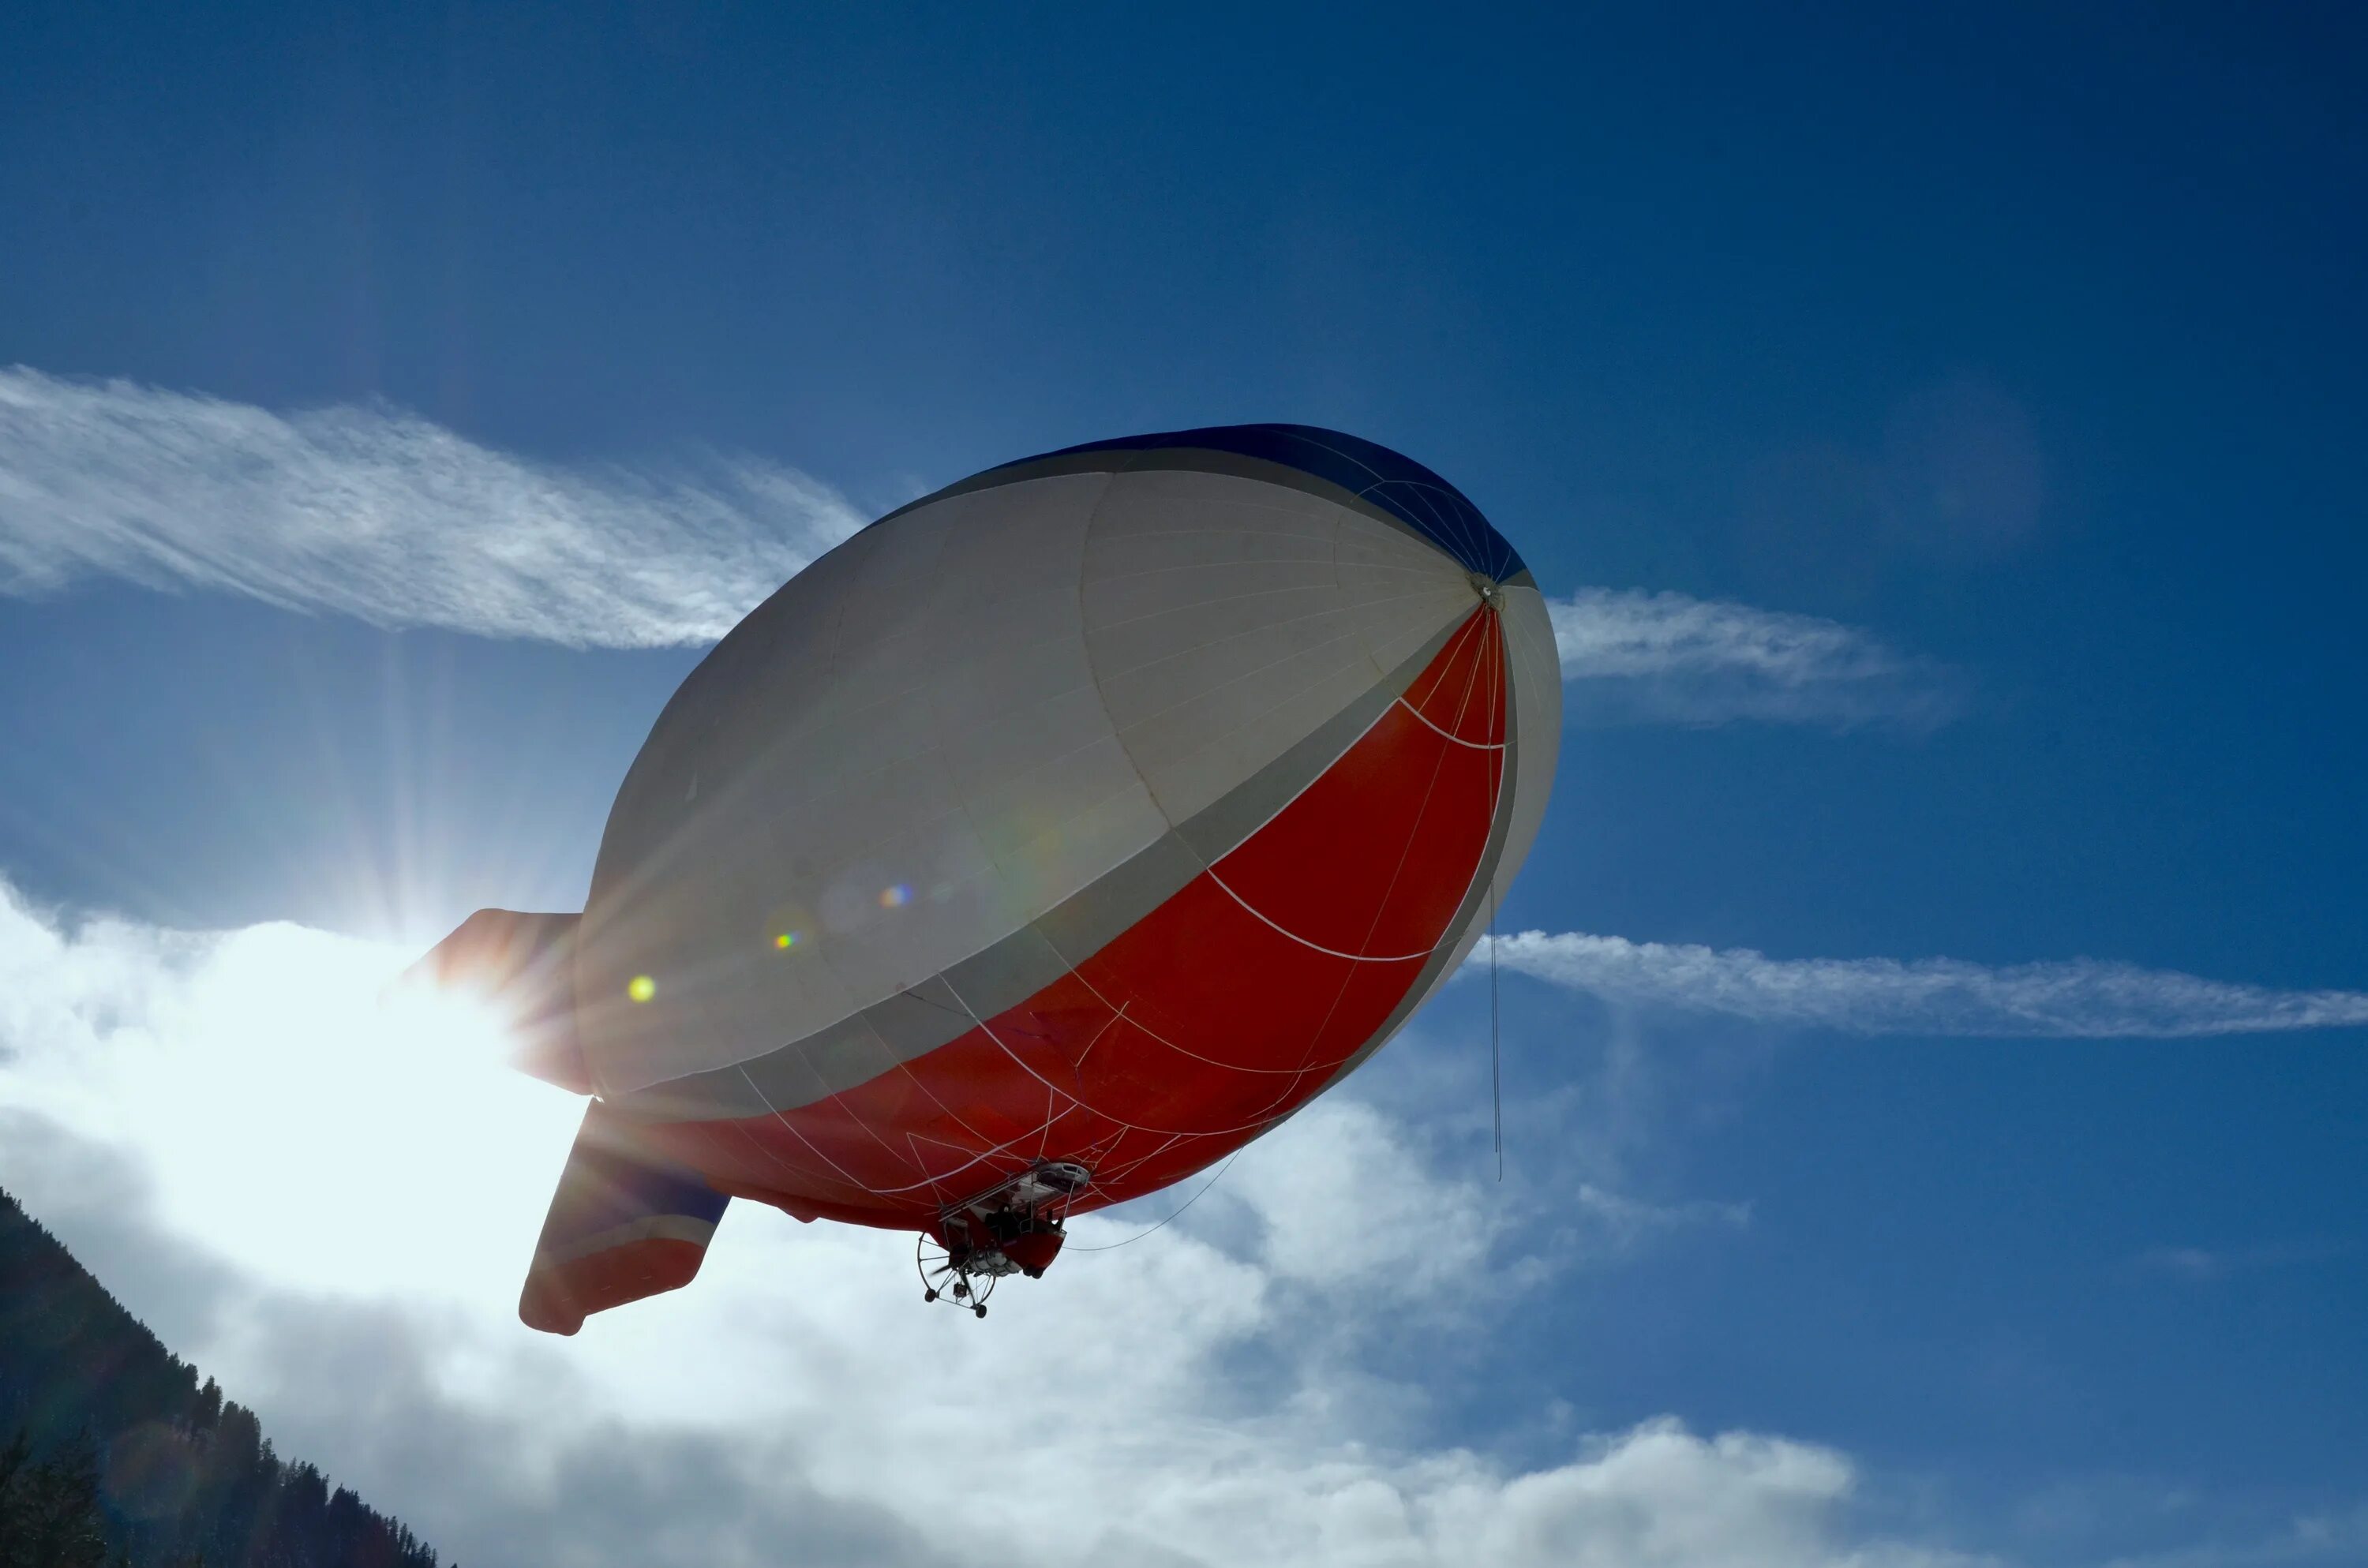 Flying balloon. Блимп дирижабль. Воздушный шар дирижабль. Овальный воздушный шар. Летающий воздушный шар.